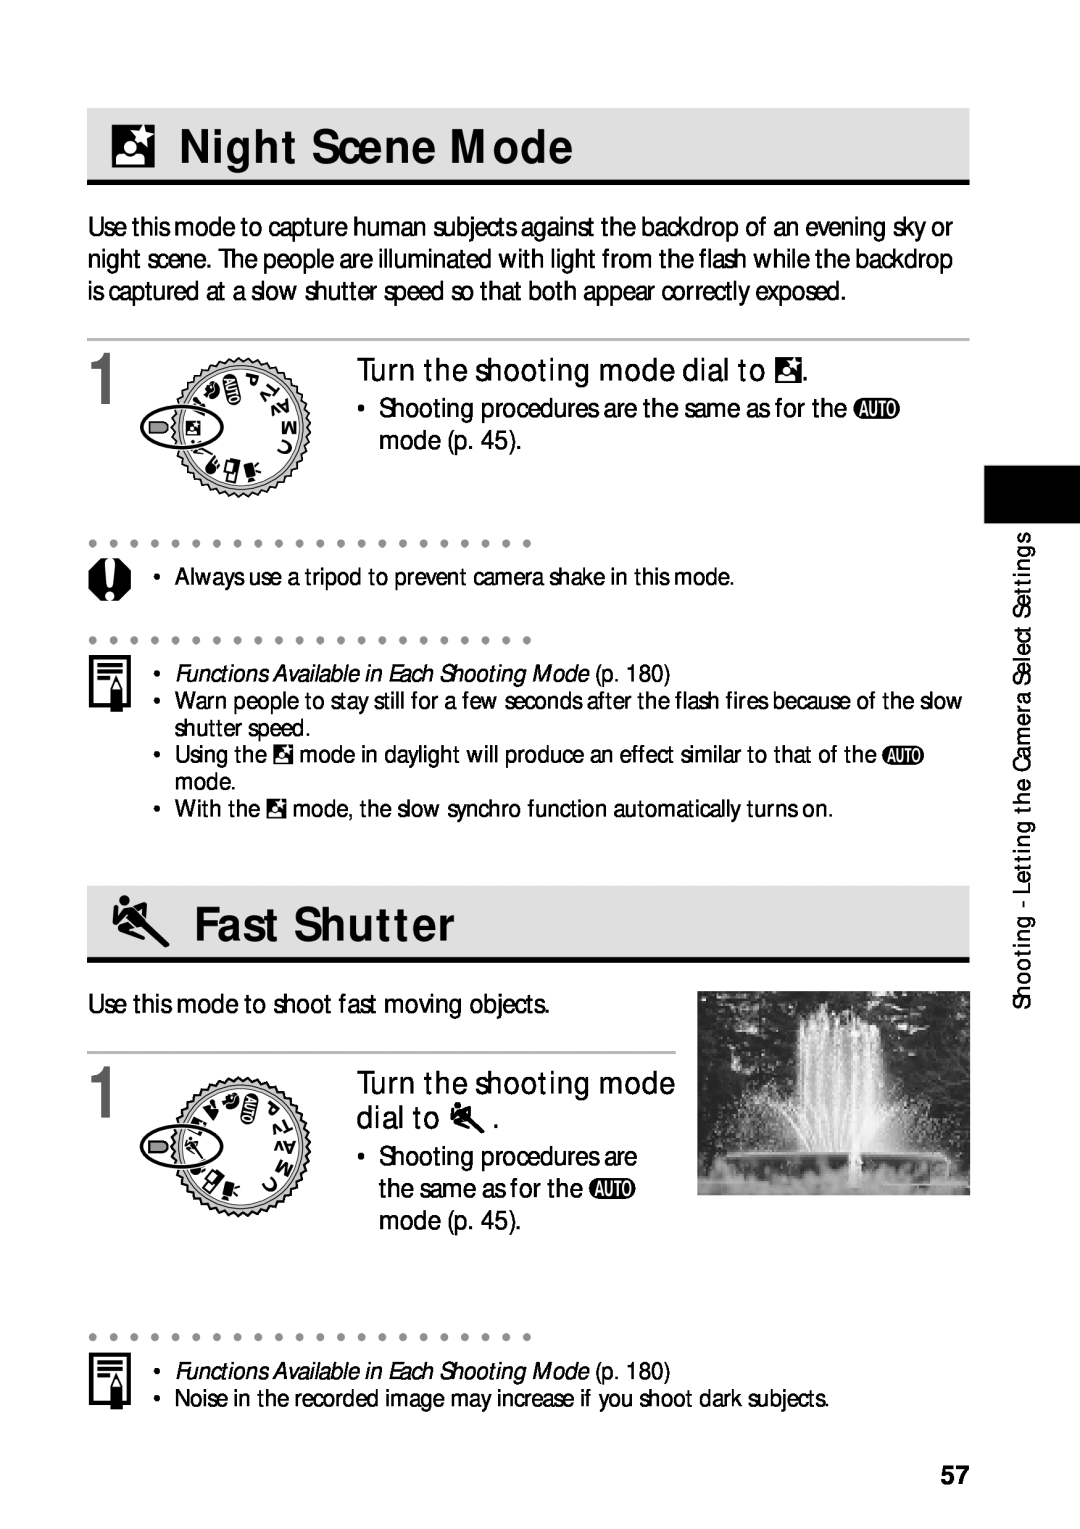 Canon PowerShot S45 manual Night Scene Mode, Fast Shutter, Turn the shooting mode dial to 